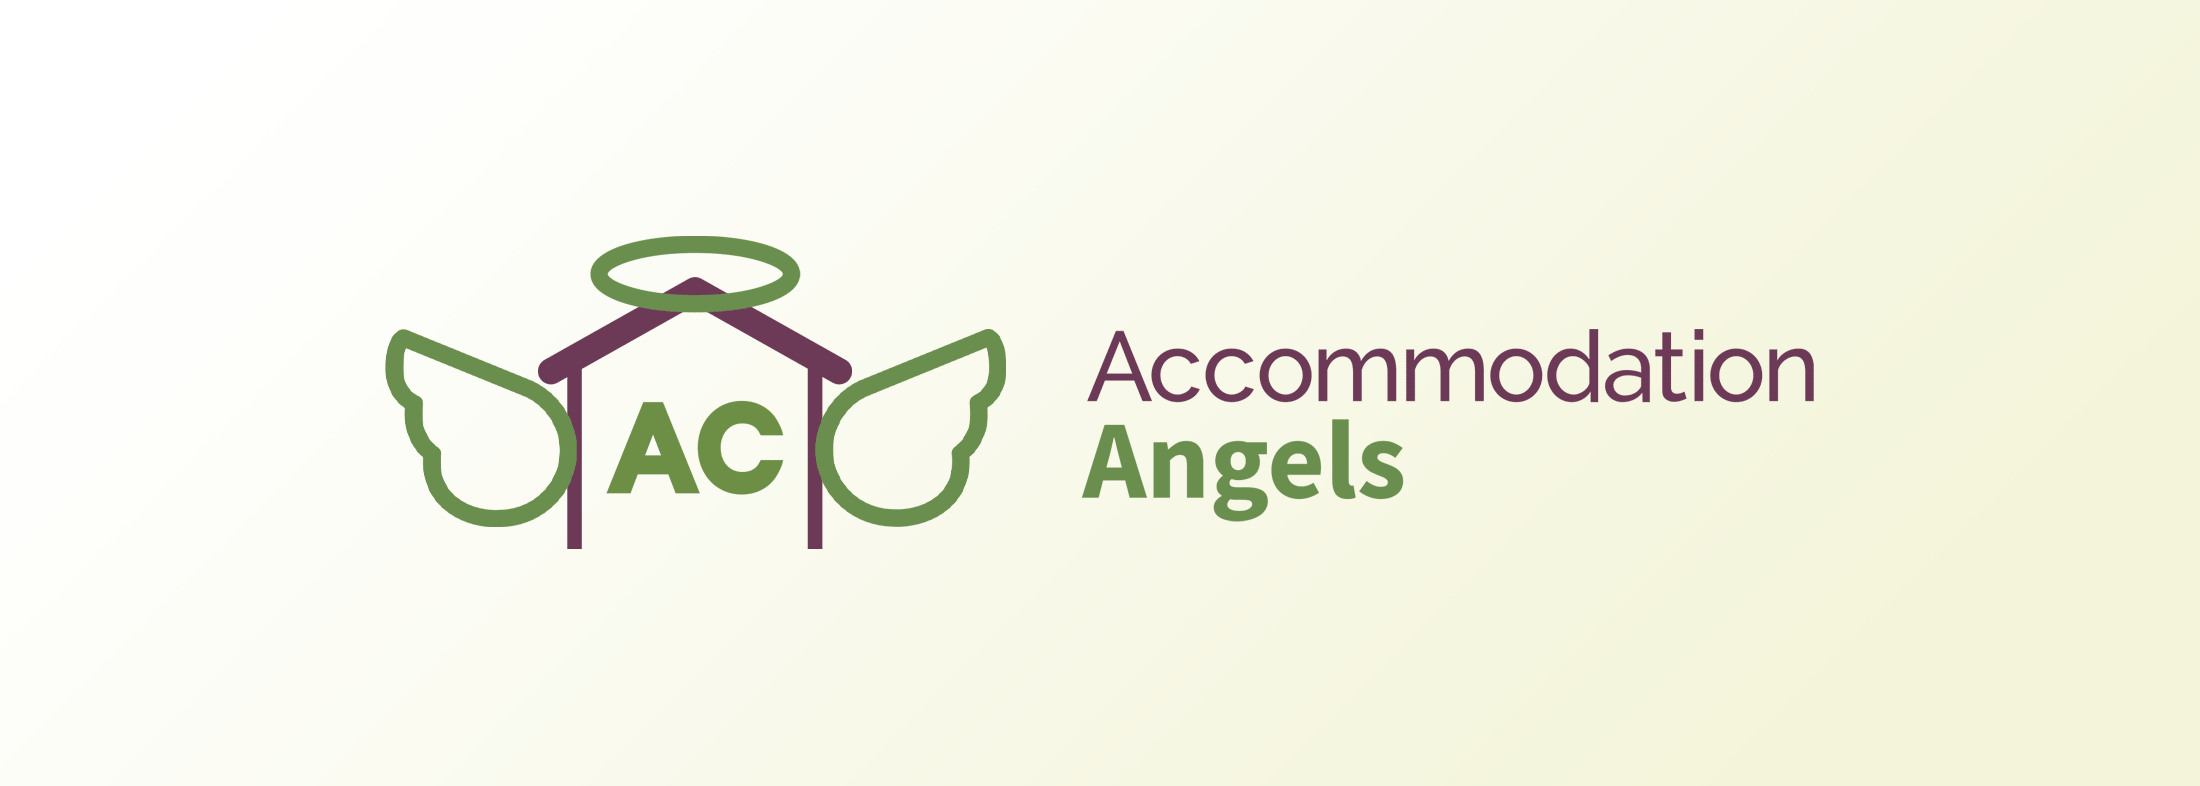 Accommodation Angels